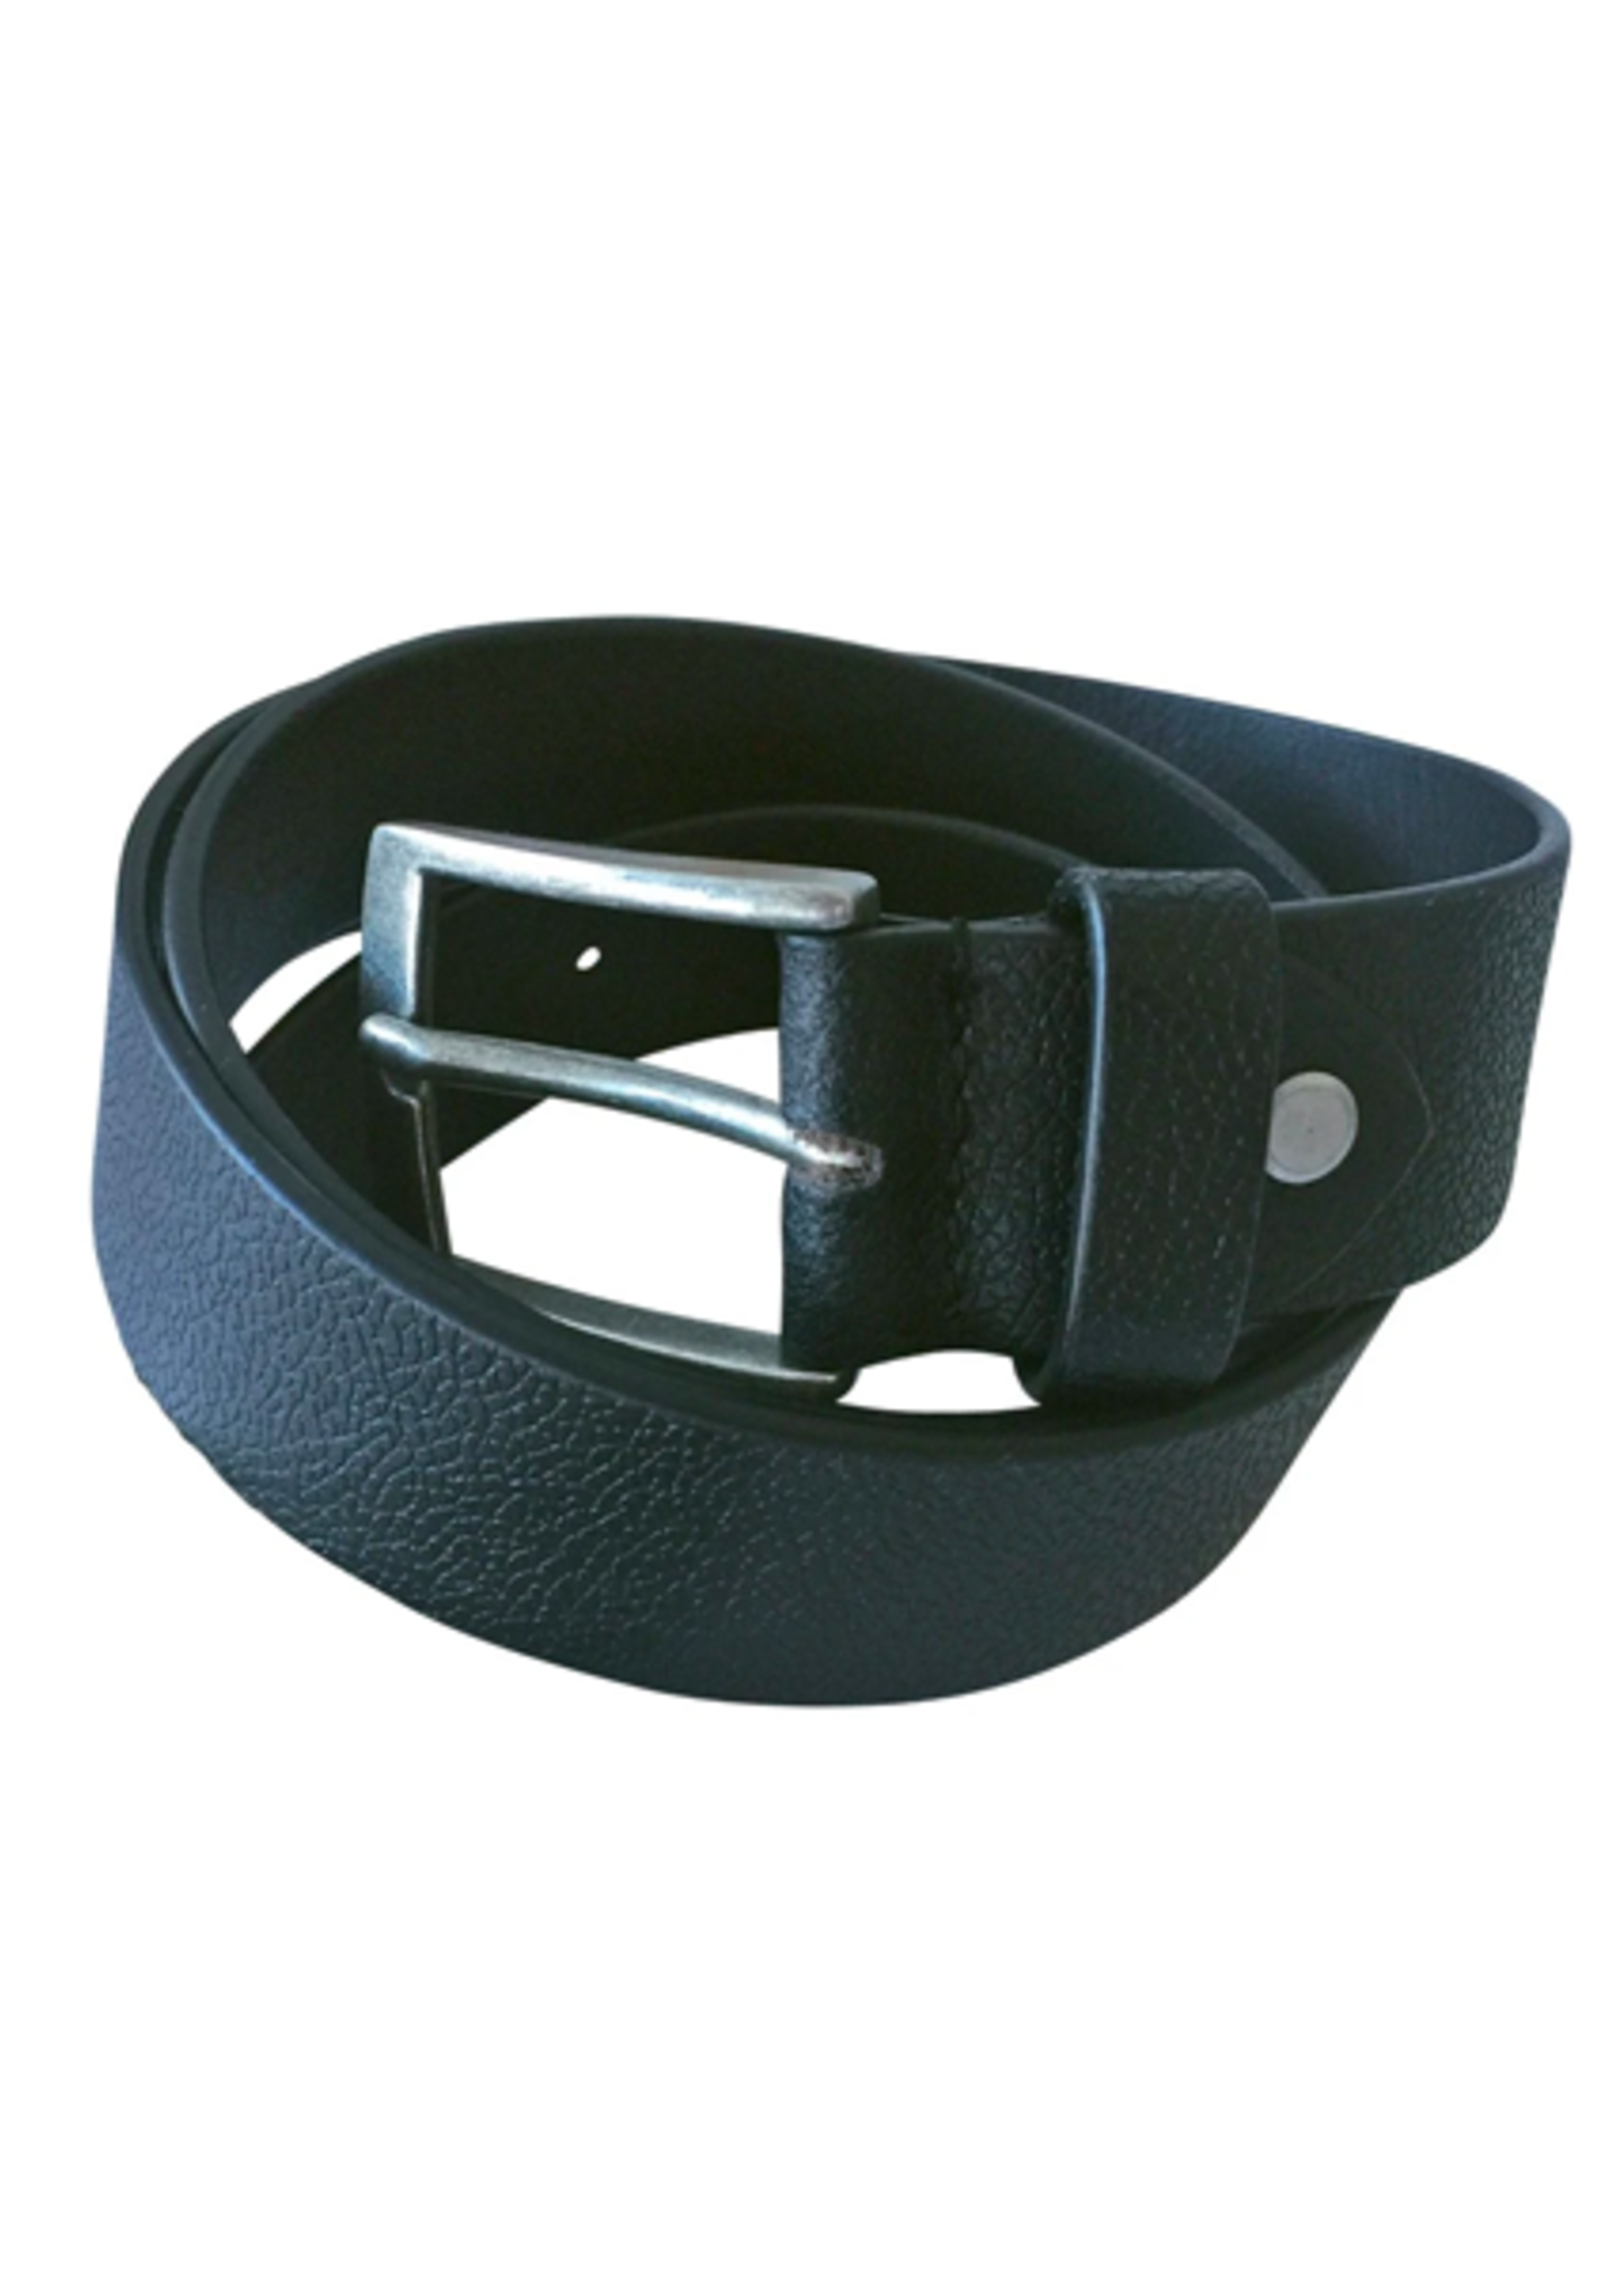 6009 Leather Belt in Black